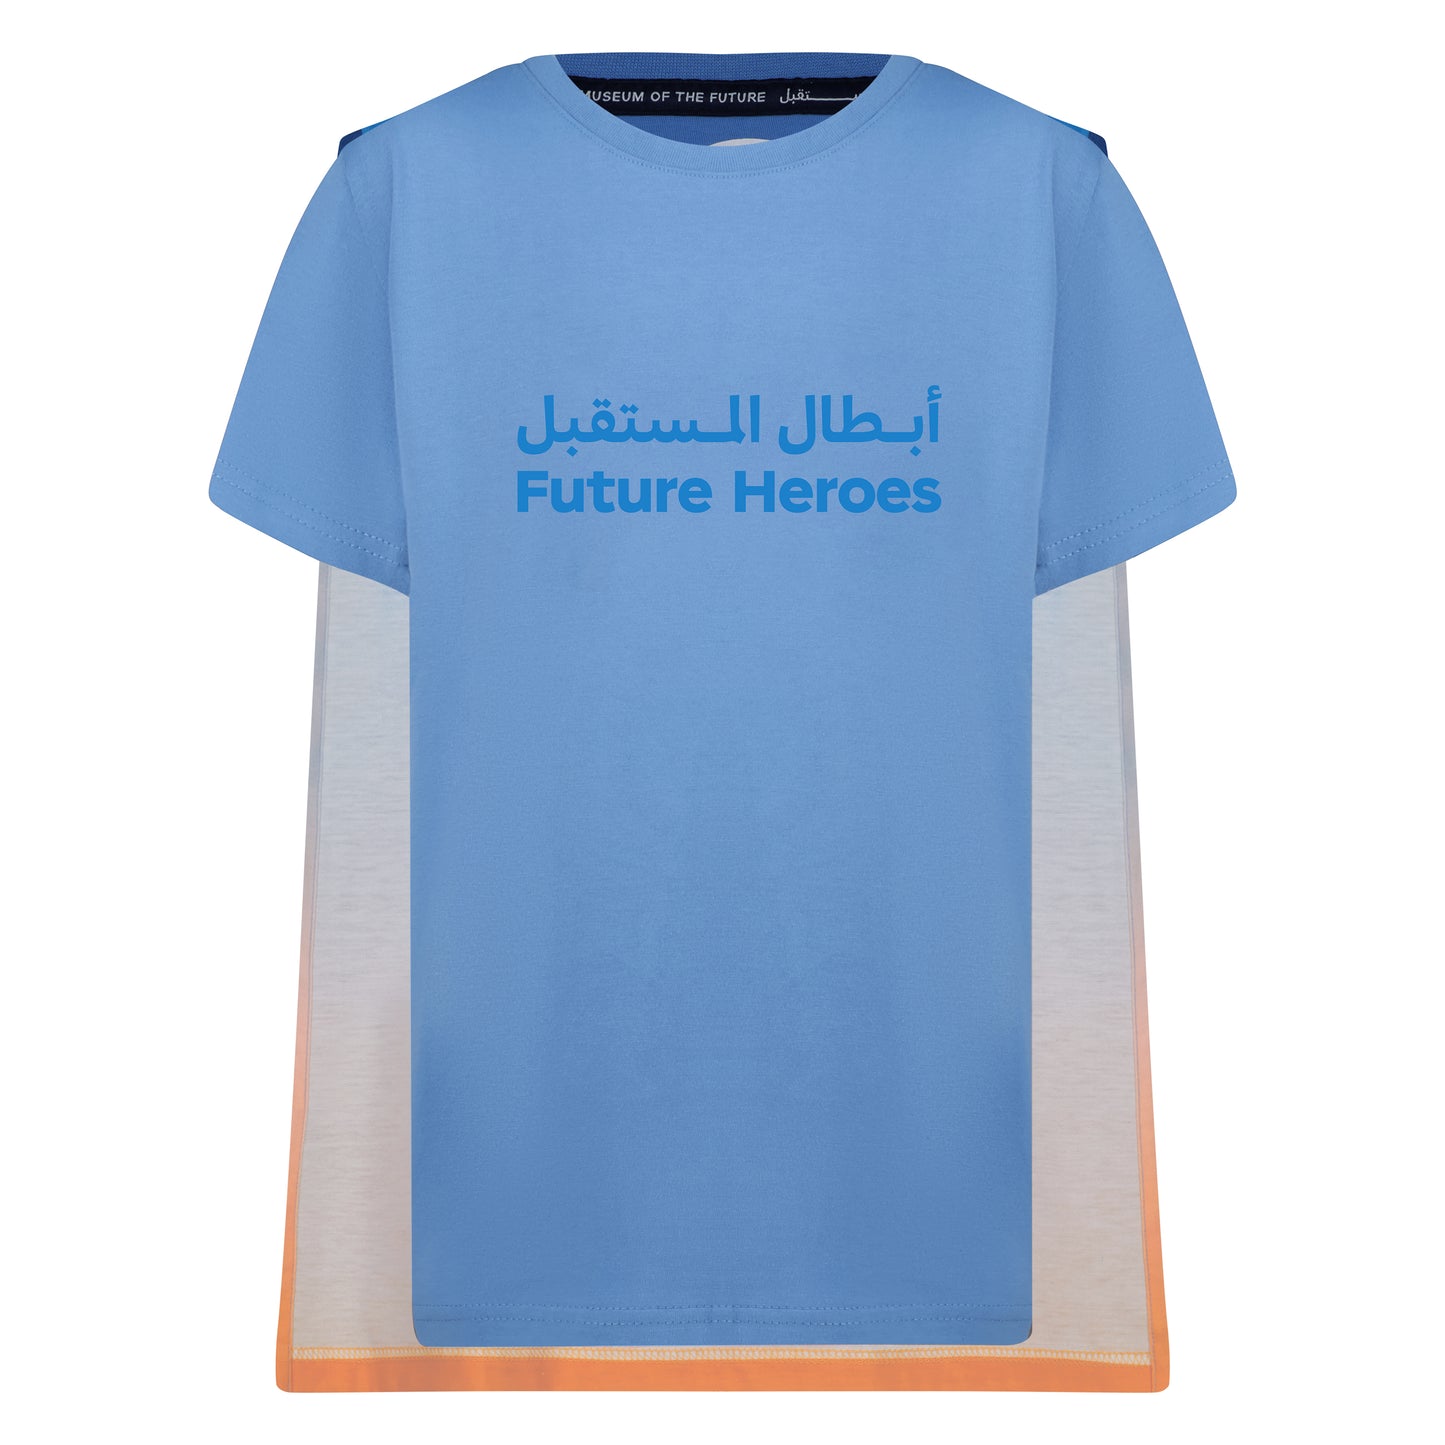 KIDS FUTURE HEROES T-SHIRT | BLUE 4-6YR